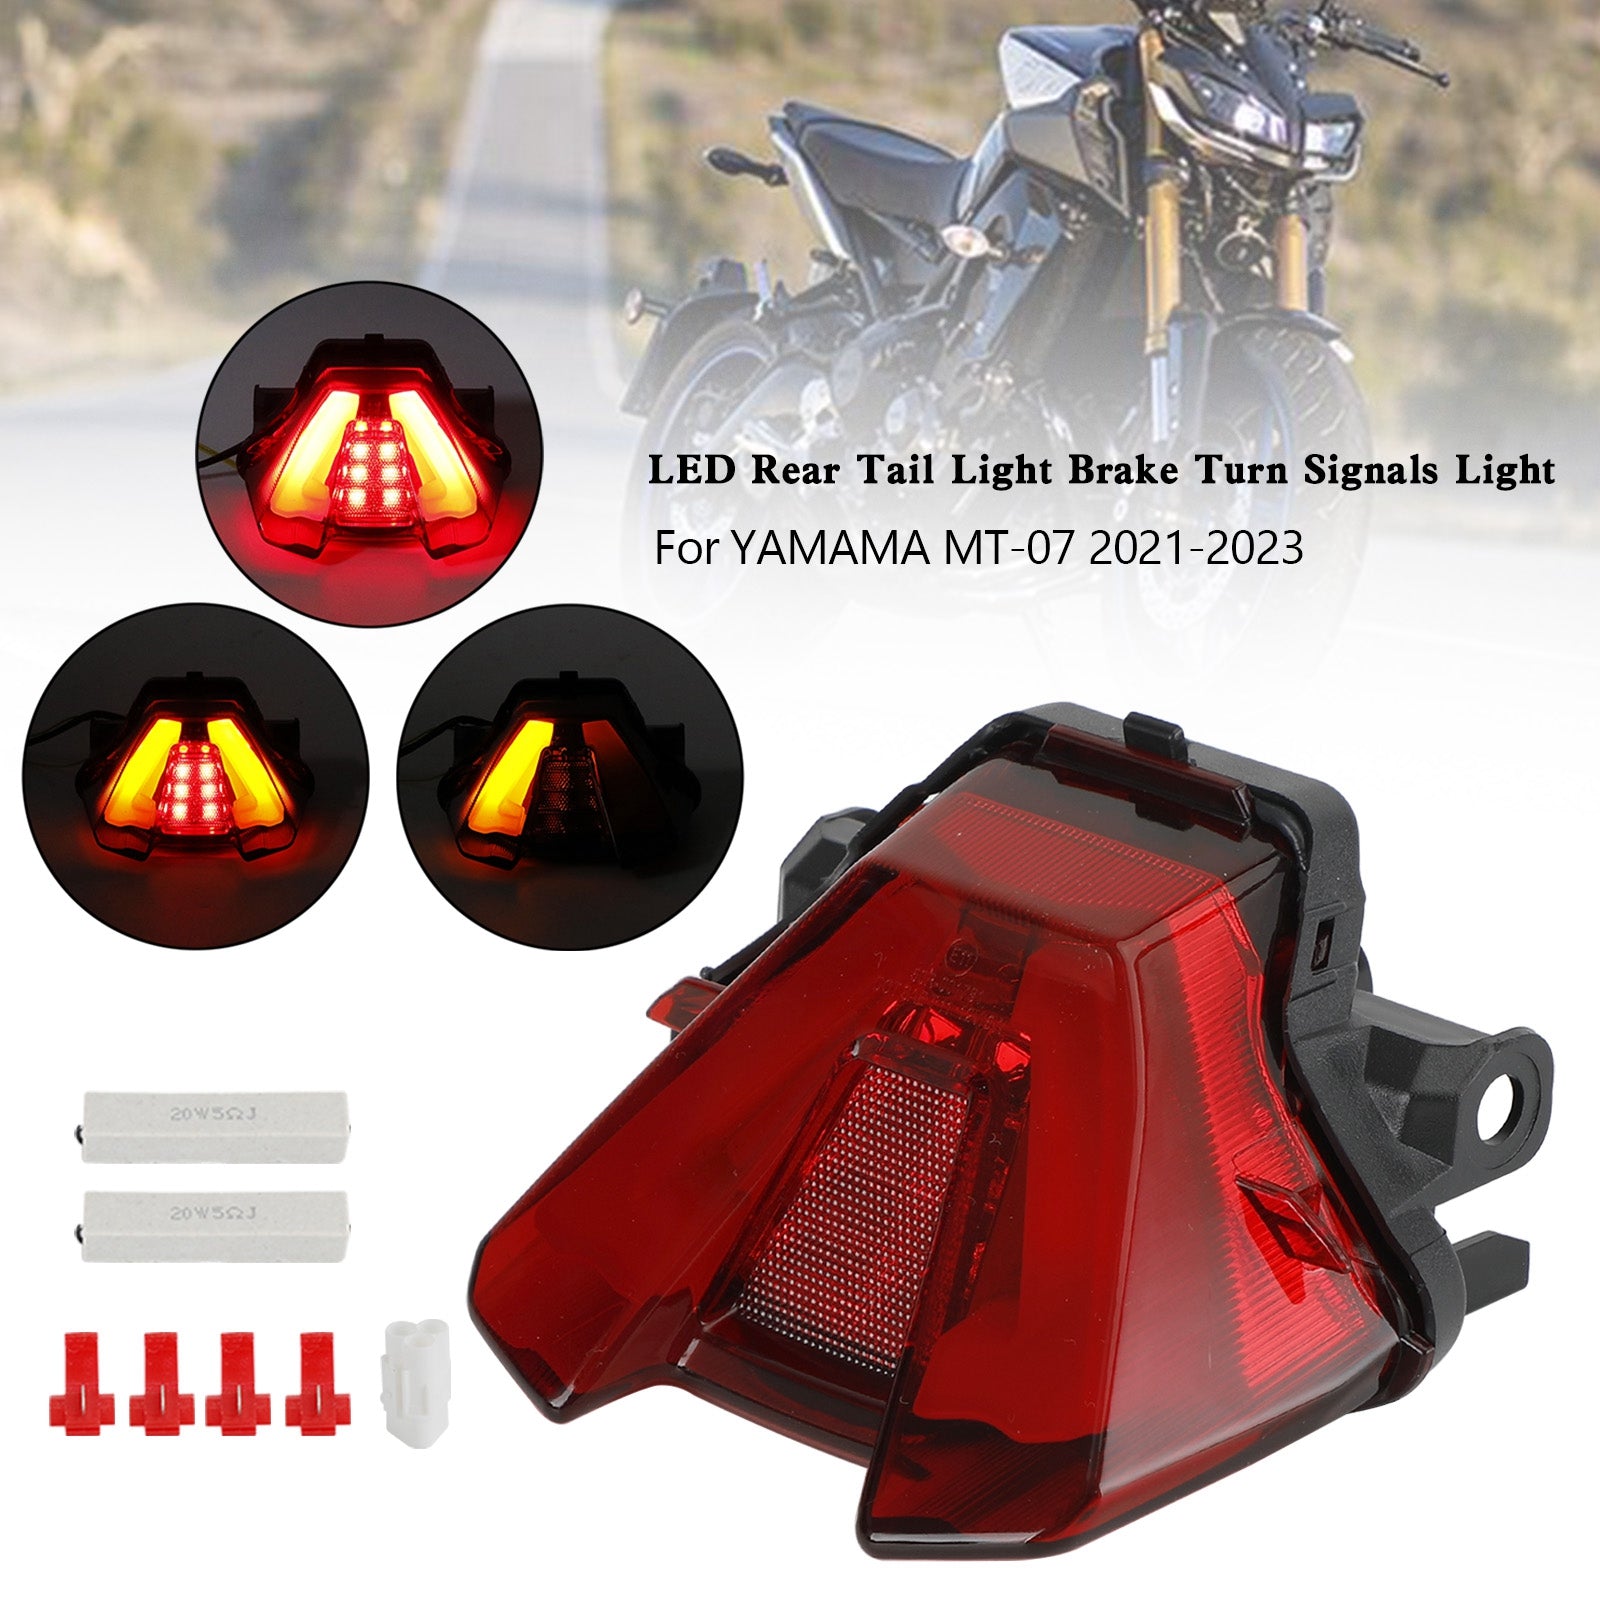 LED Rear Tail Light Brake Turn Signals For Yamaha MT-07 MT07 2021-2023